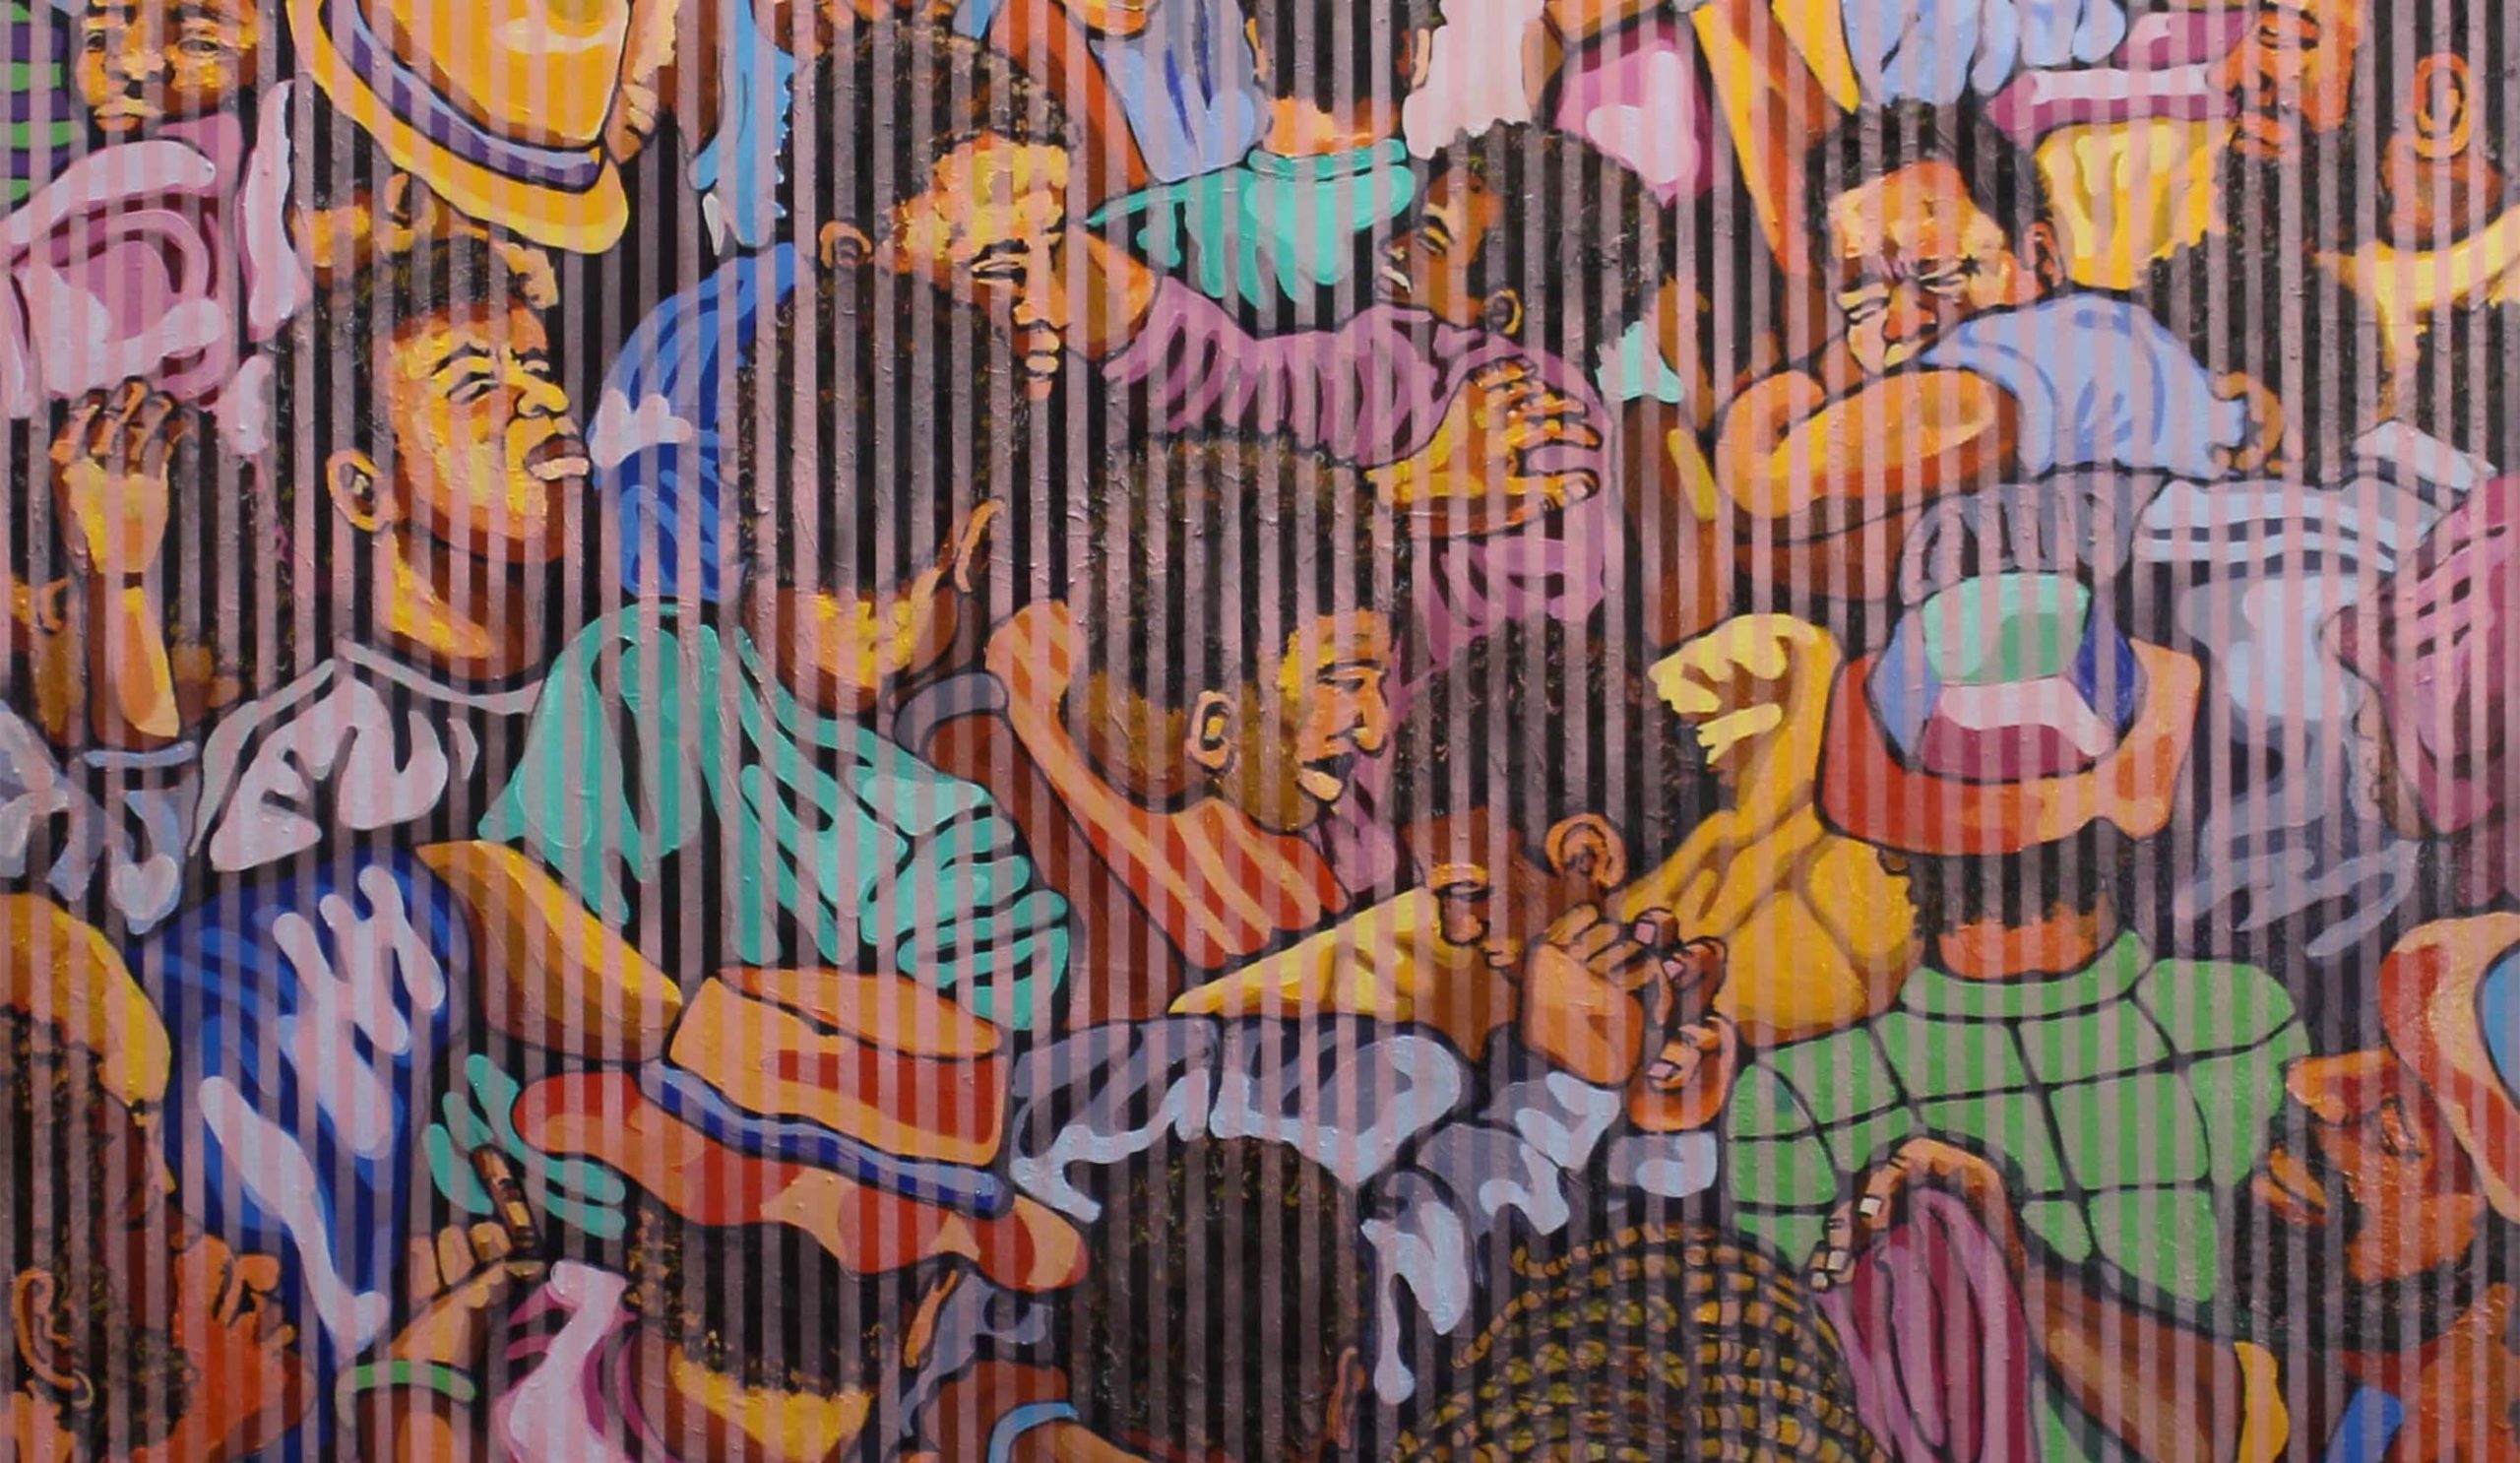 Eviction (2018) by Tafadzwa Tega Oil paint on canvas 1400 x 1600 mm Nando’s UK collection